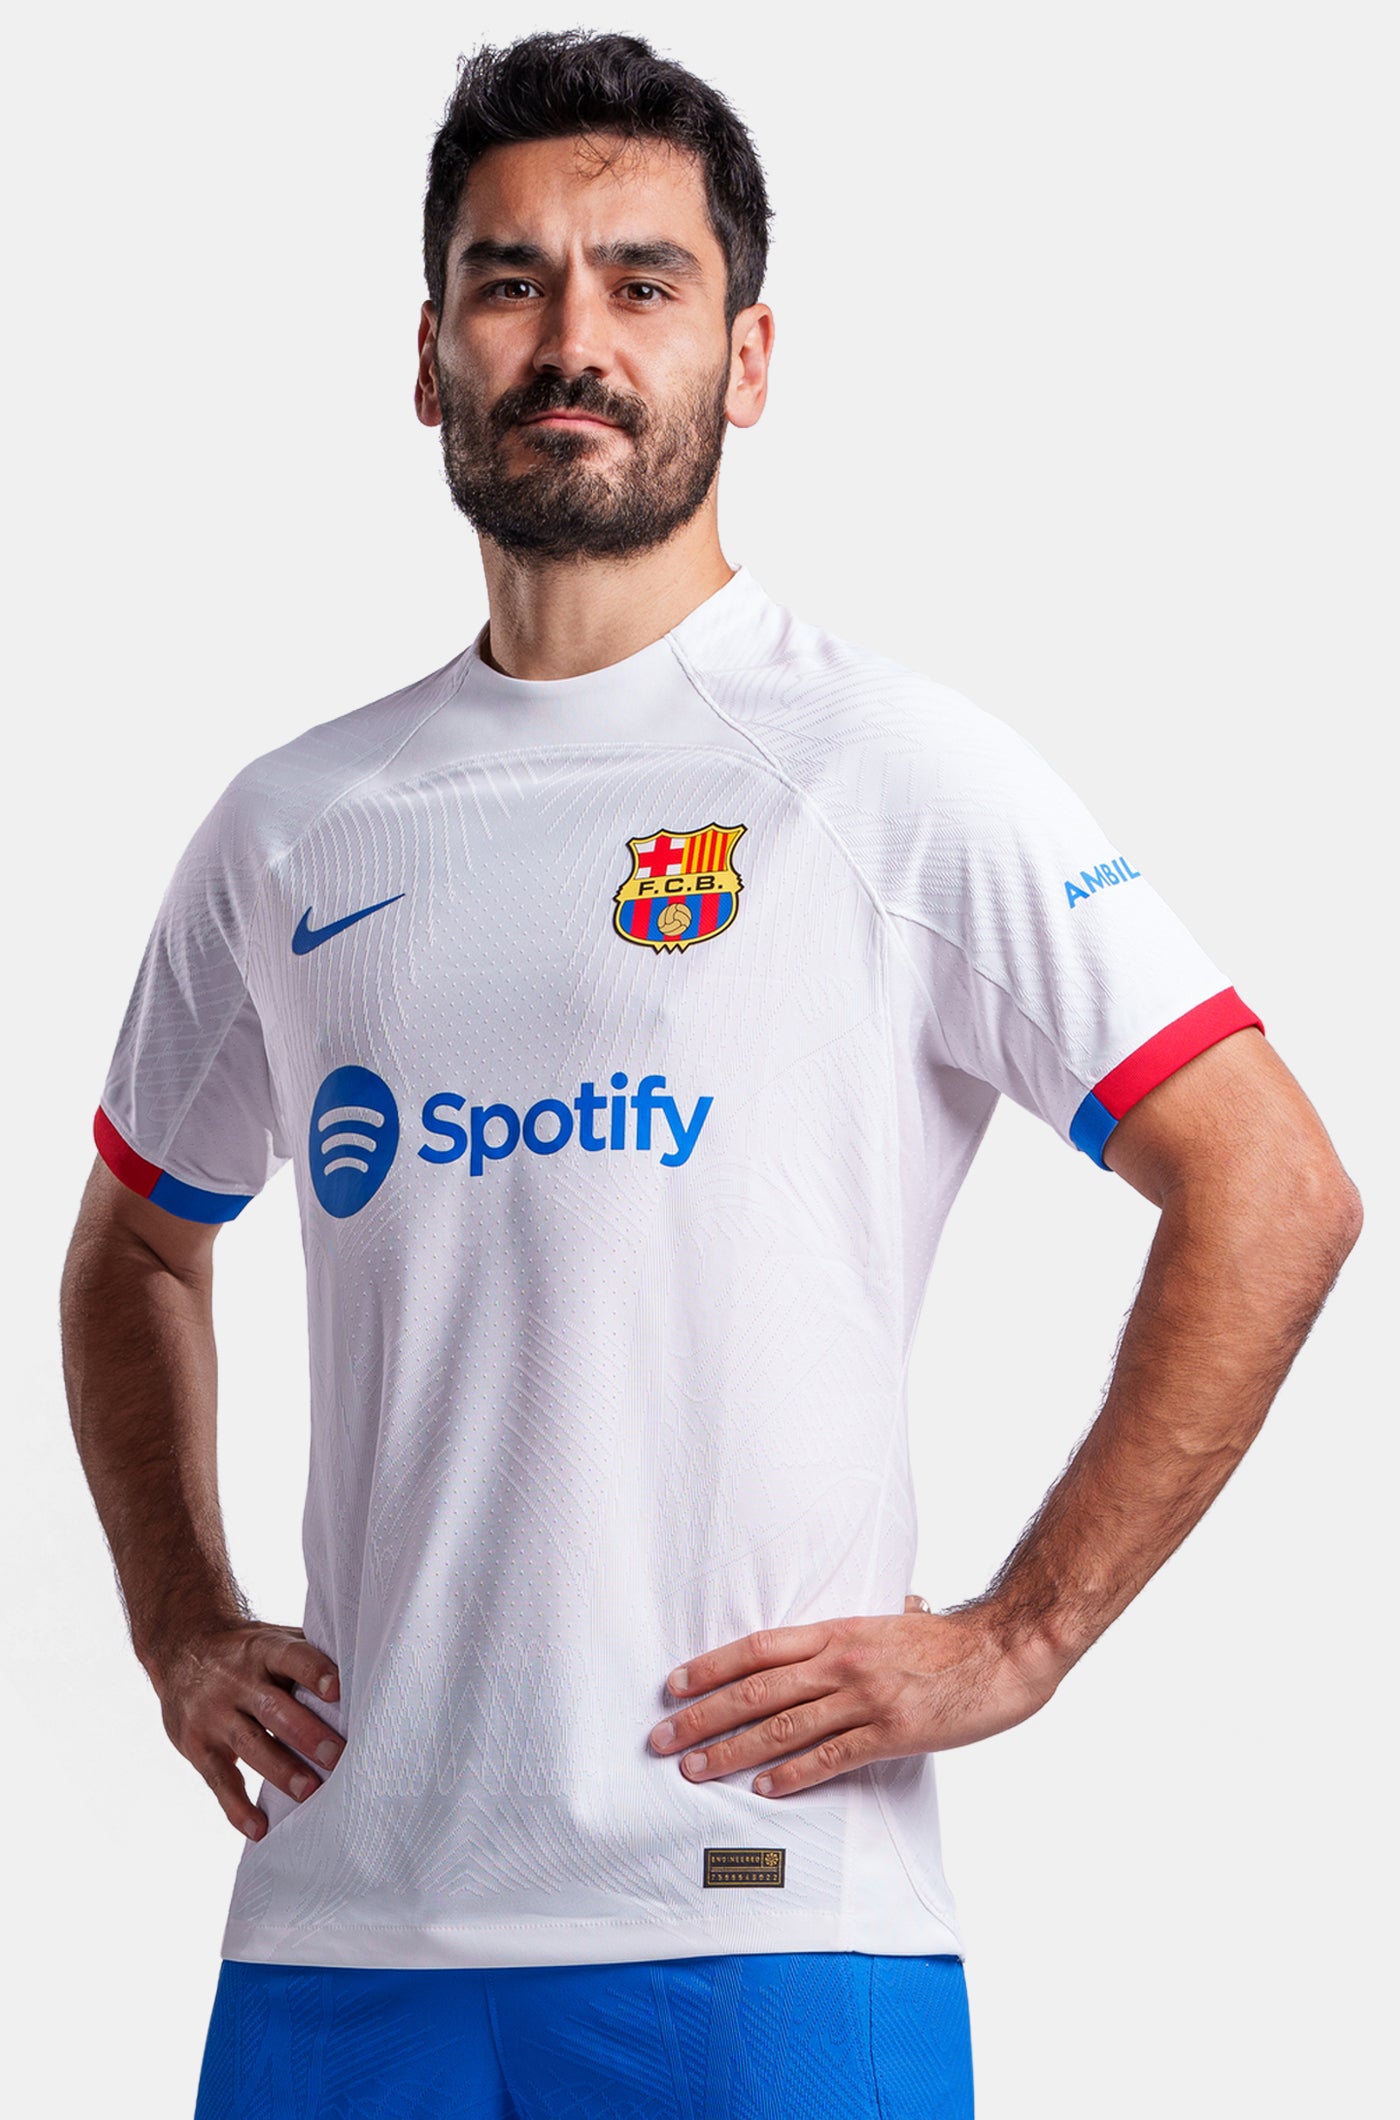 UCL FC Barcelona away shirt 23/24 Player’s Edition - GÜNDOĞAN